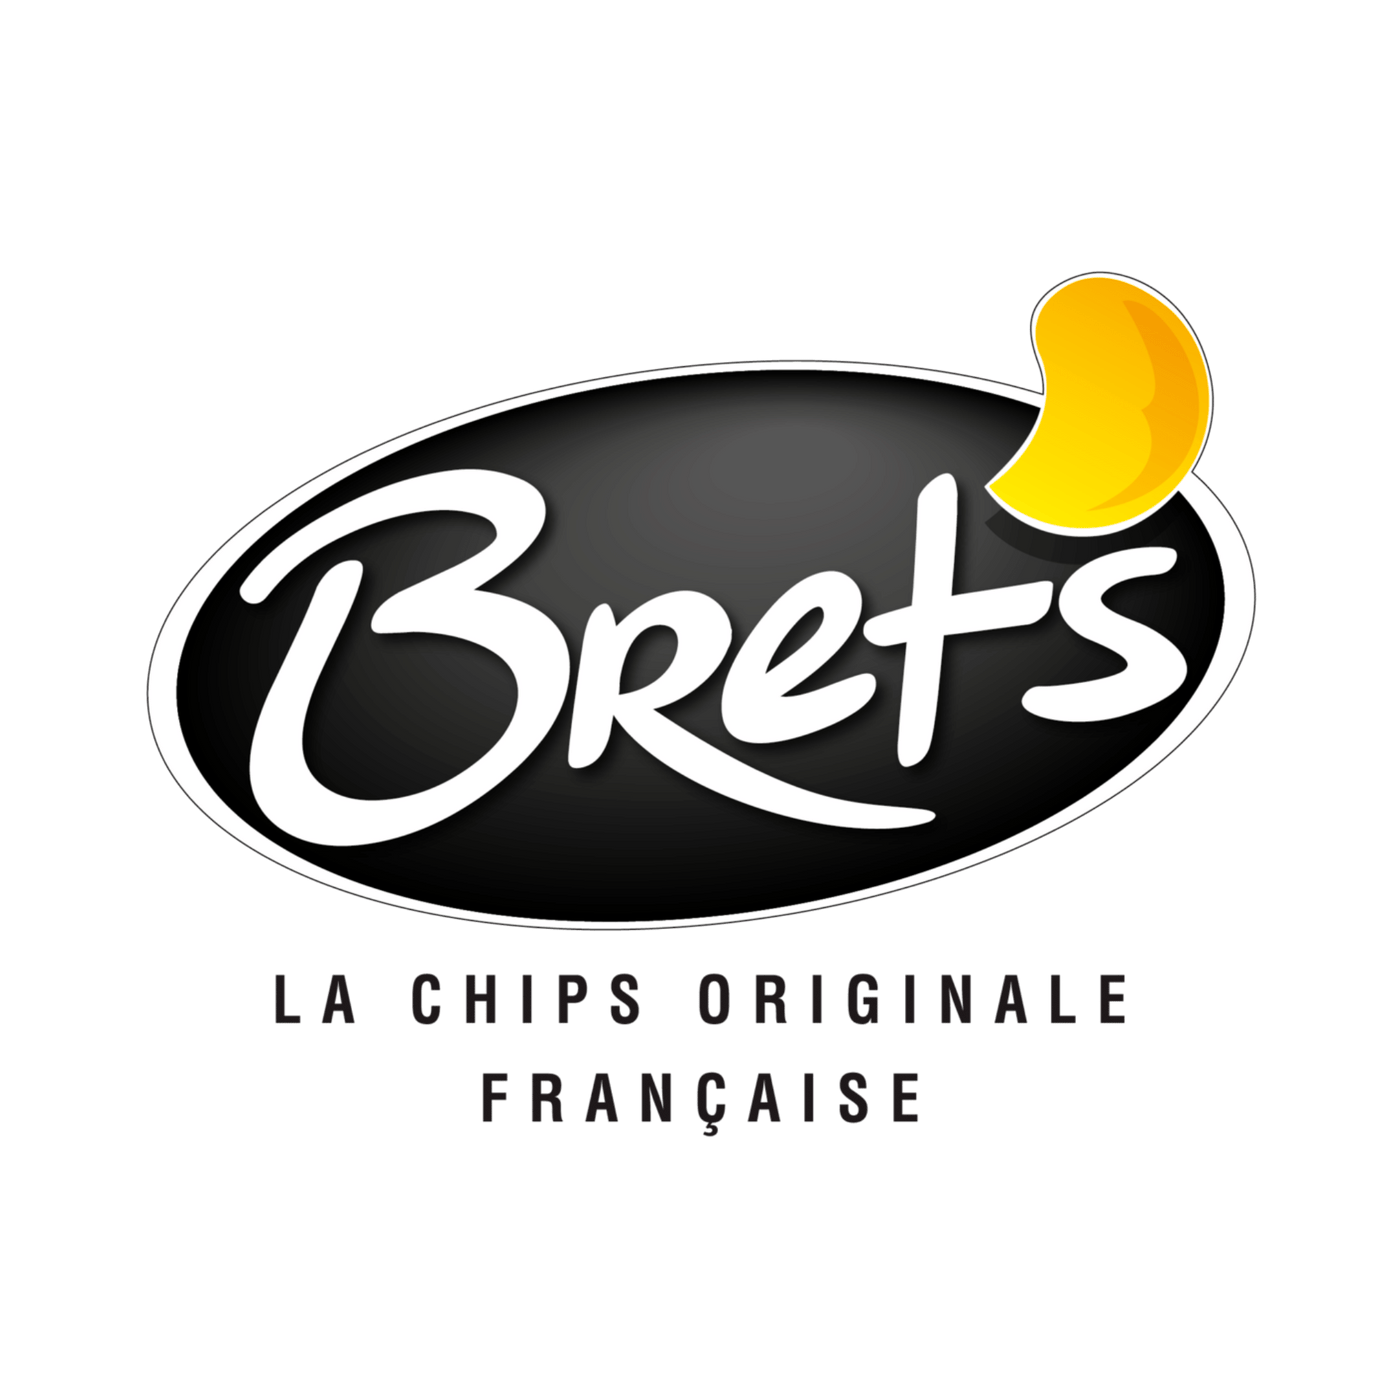 Bret's - Chips Pesto & Mozzarella (125g) commandez en ligne avec